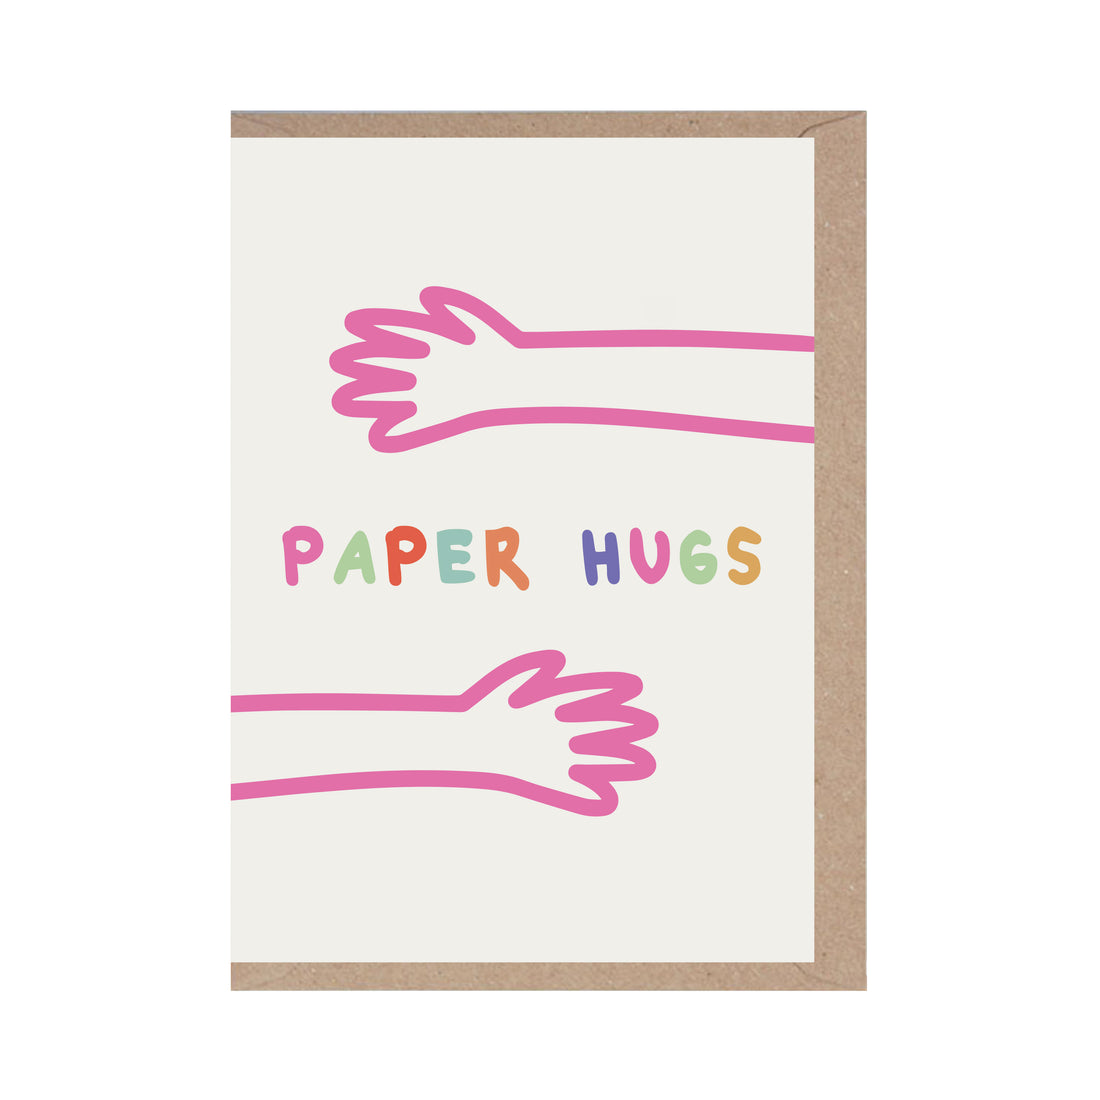 Paper Hugs